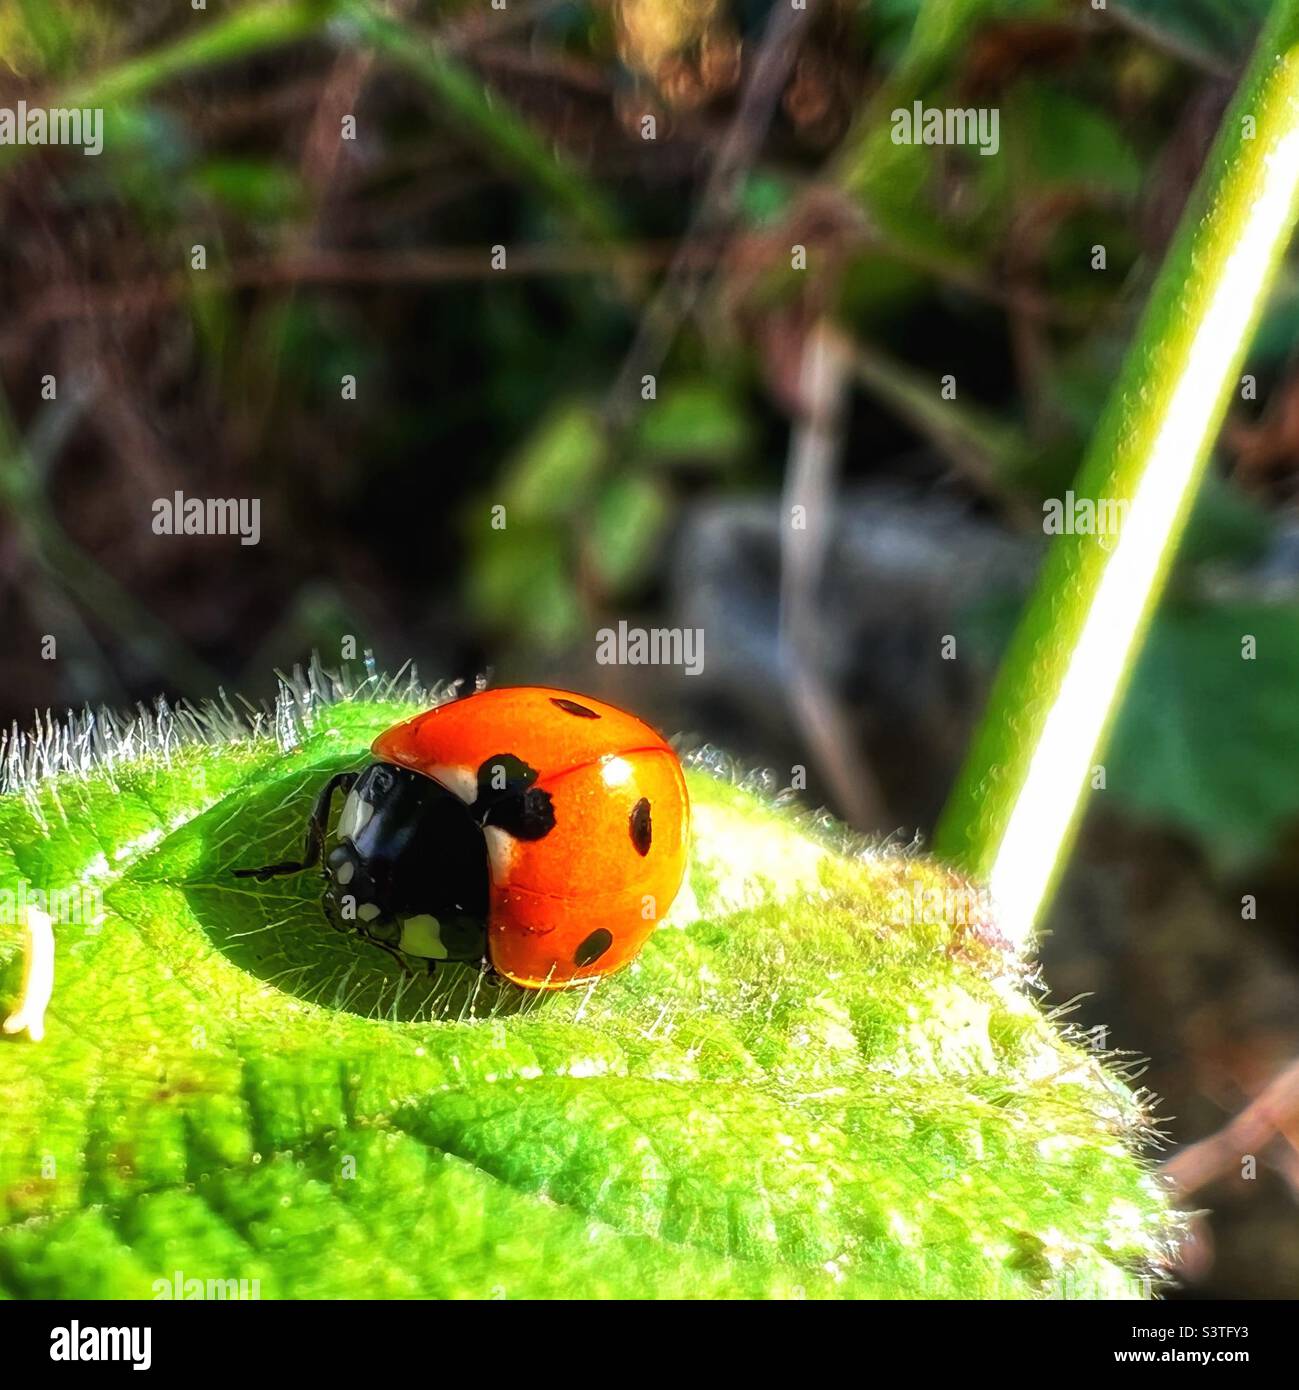 Ladybird on leaf Stock Photo